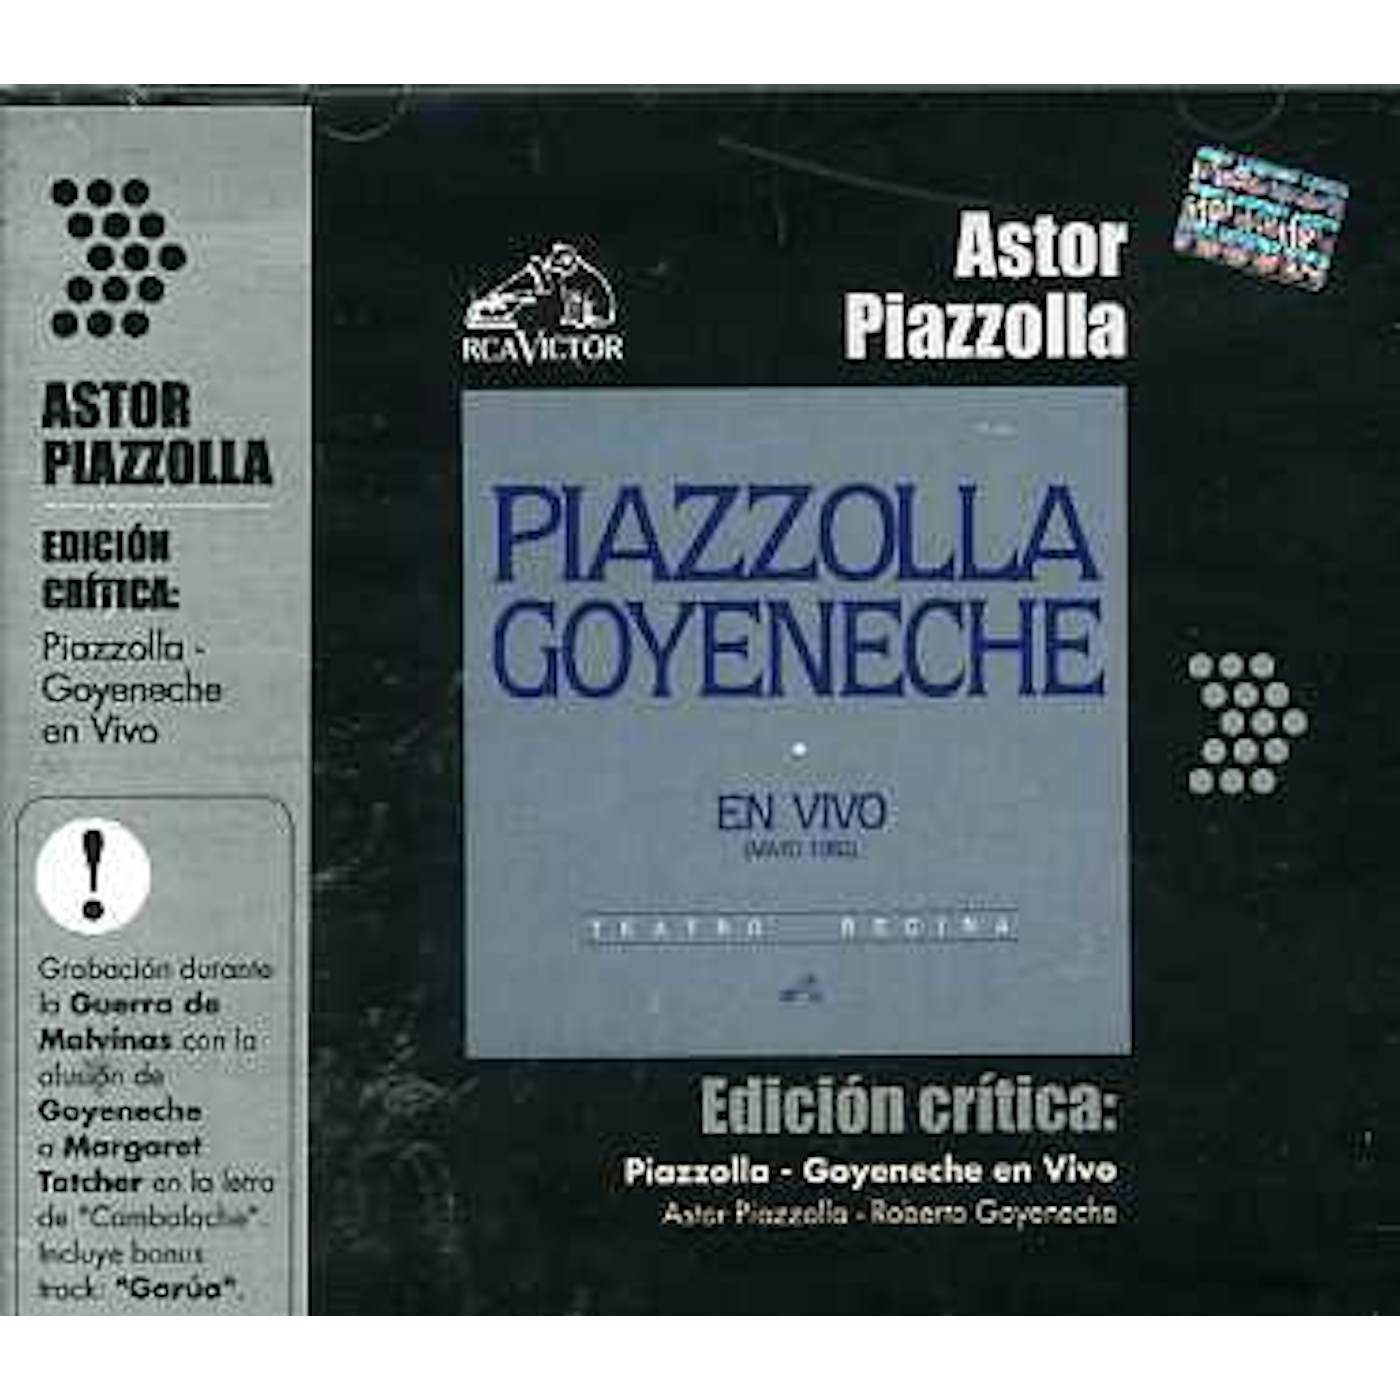 Astor Piazzolla EDICION CRITICA CD